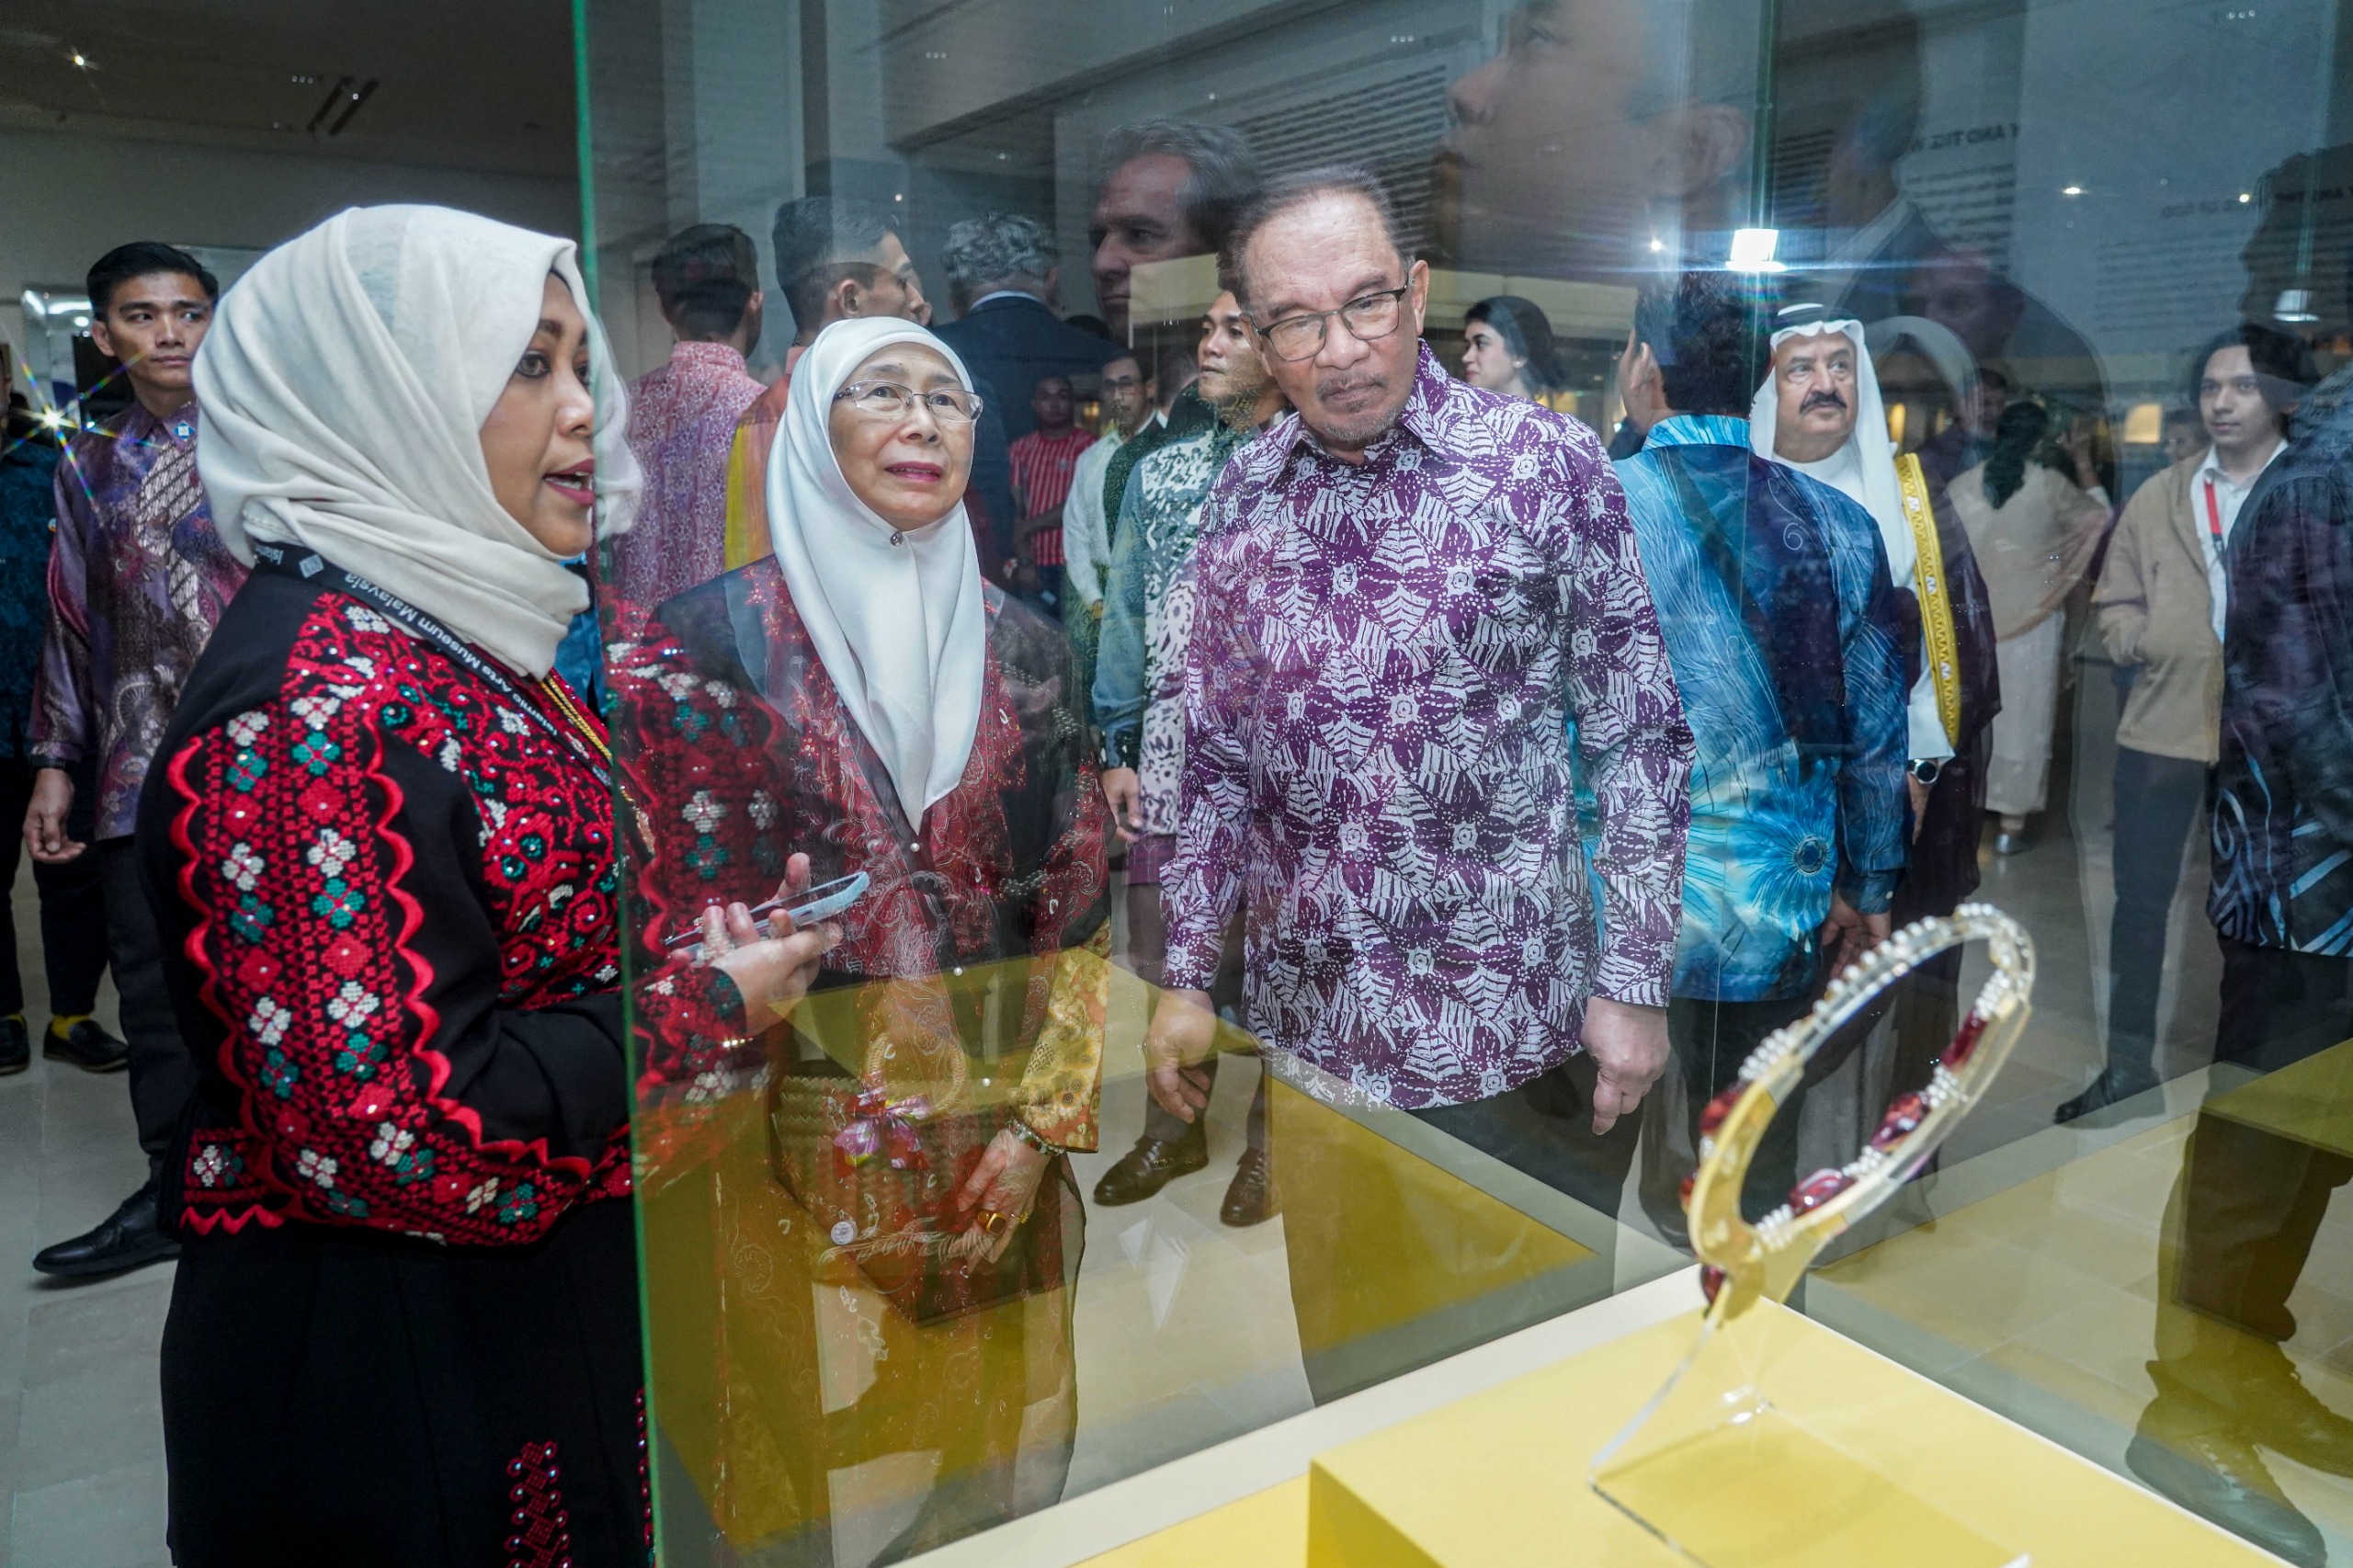 Sultan Johor bebas beri pandangan, prinsip Perlembagaan tetap dipertahan – PM